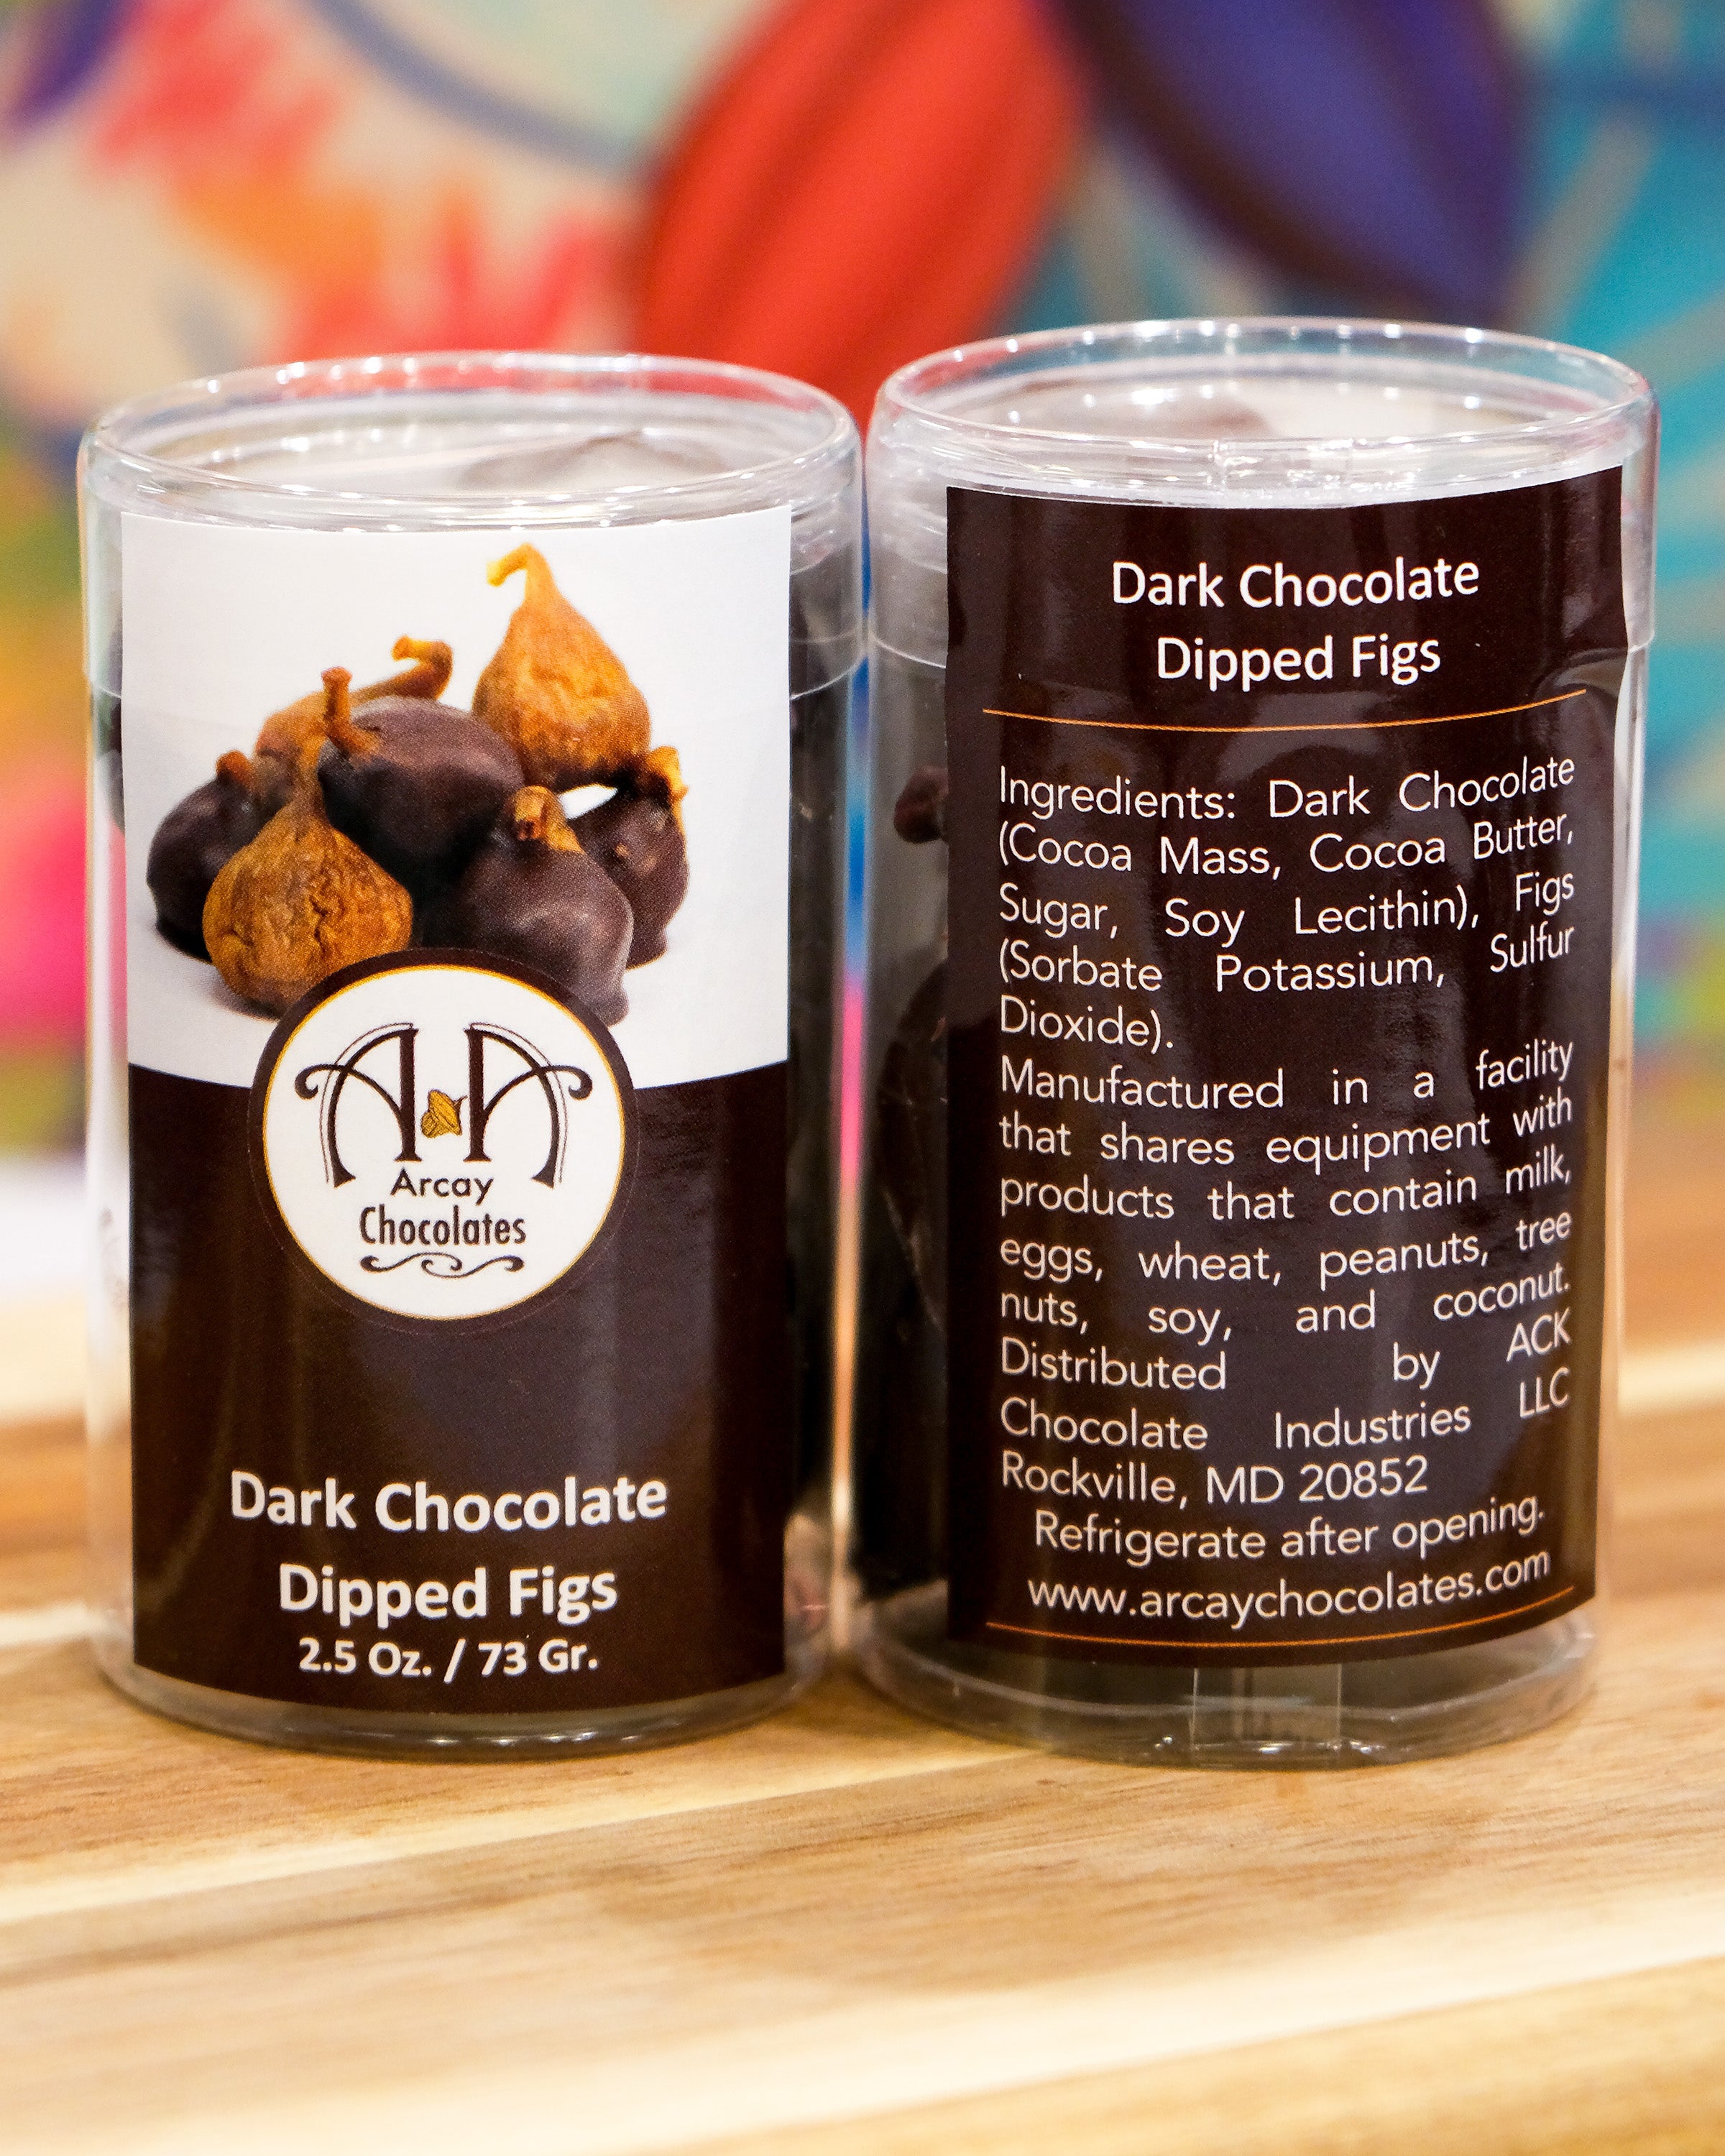 Dark chocolate covered figs made by Arcay Chocolates.